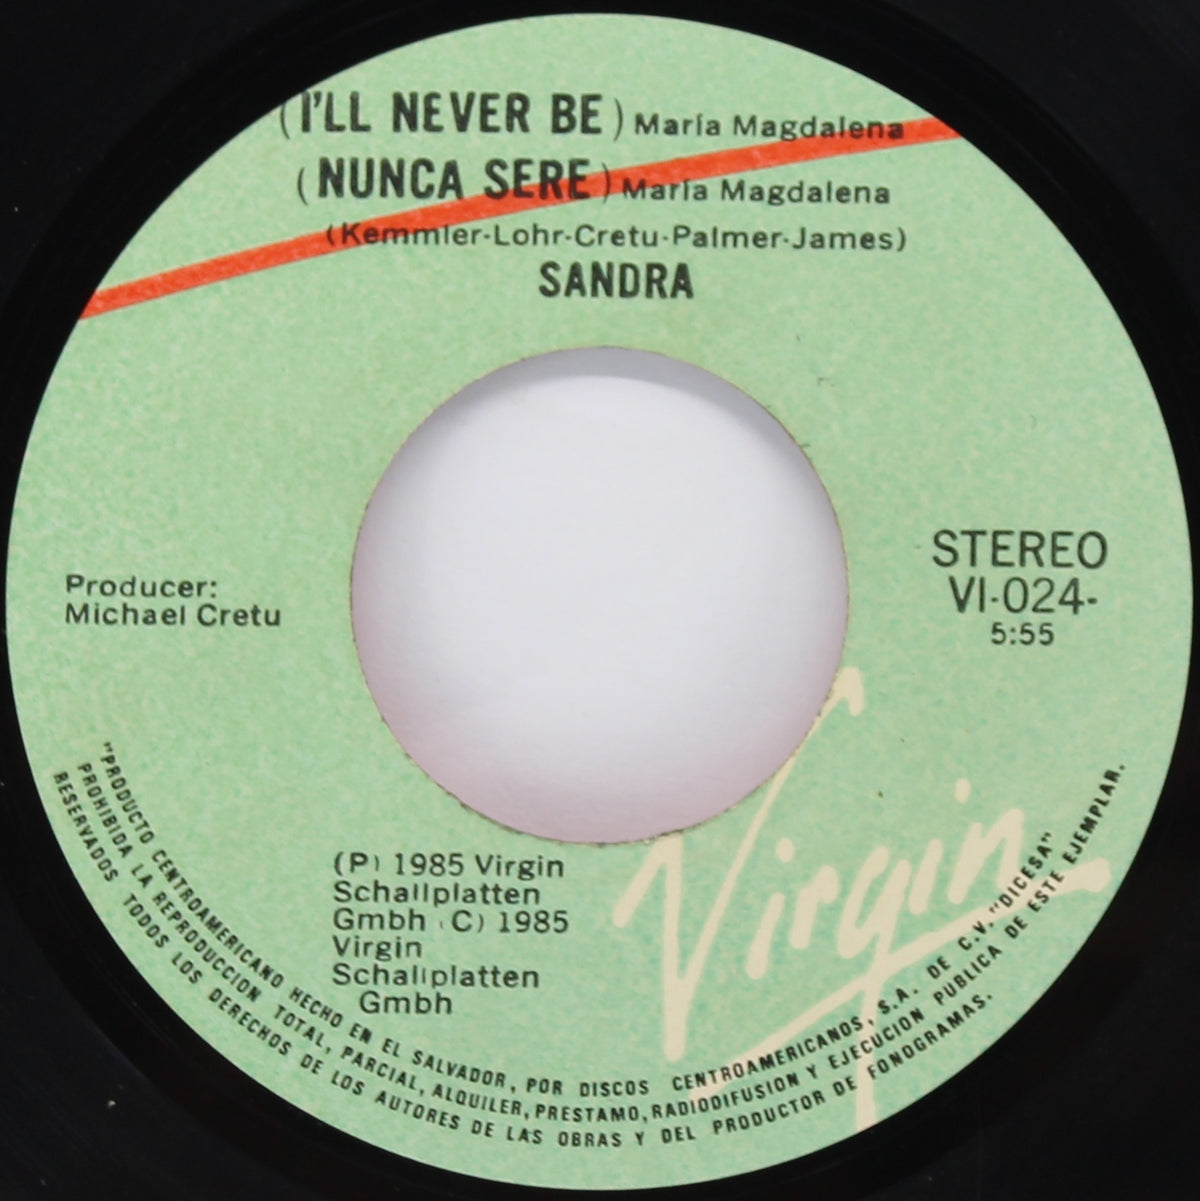 Sandra - In The Heat Of The Night, Vinyl, 7&quot;, 45 RPM, Single, El Salvador 1985